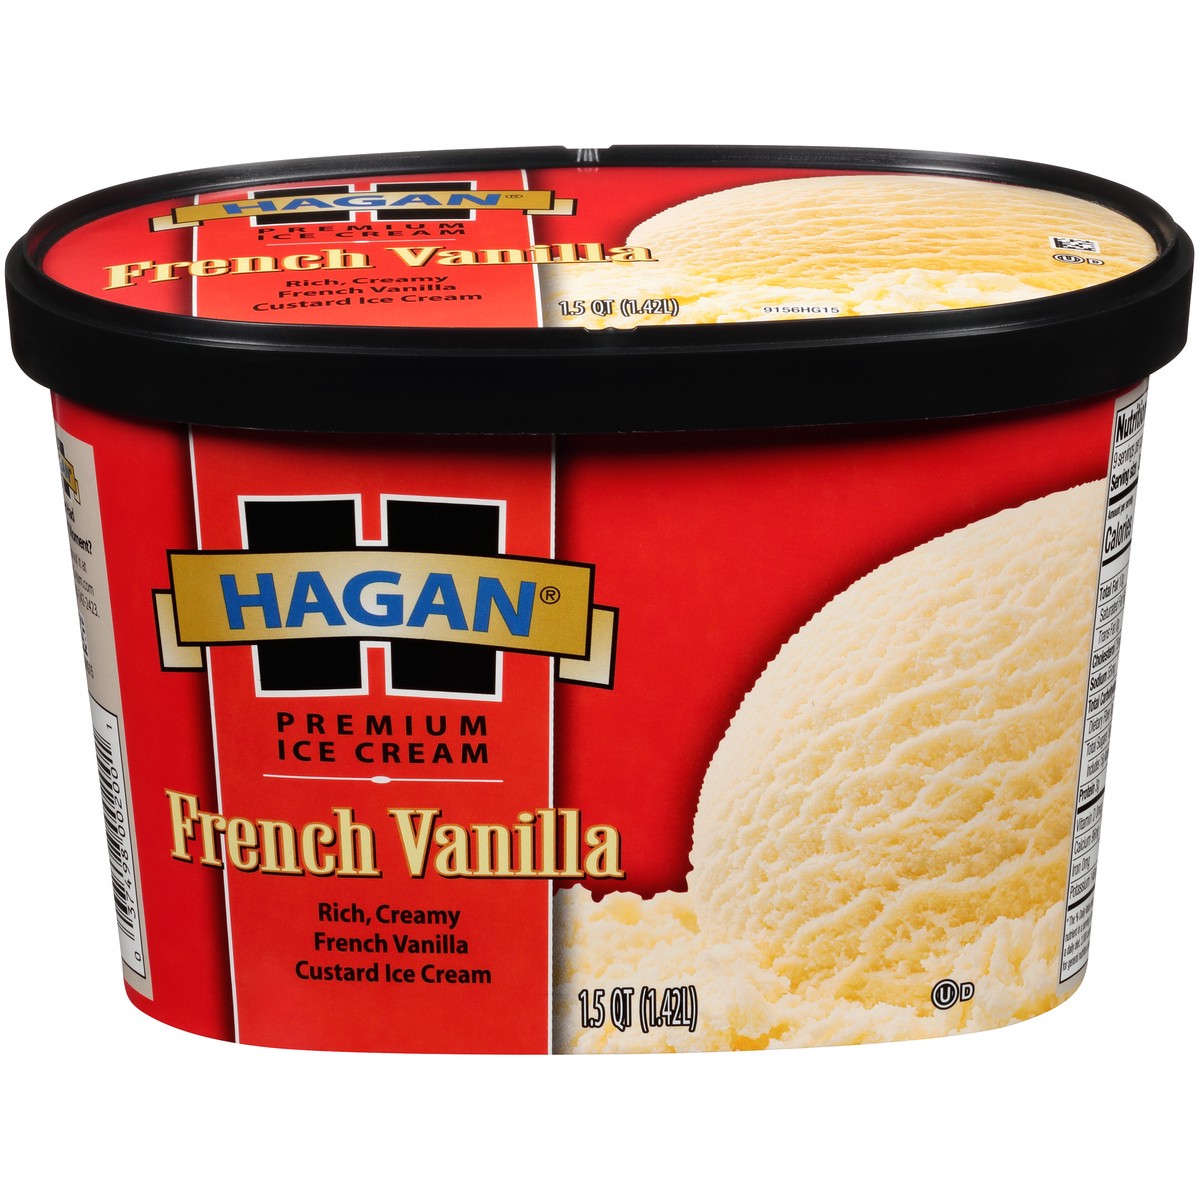 slide 1 of 10, Hagan French Vanilla Premium Ice Cream 1.5 qt. Carton, 1.42 liter